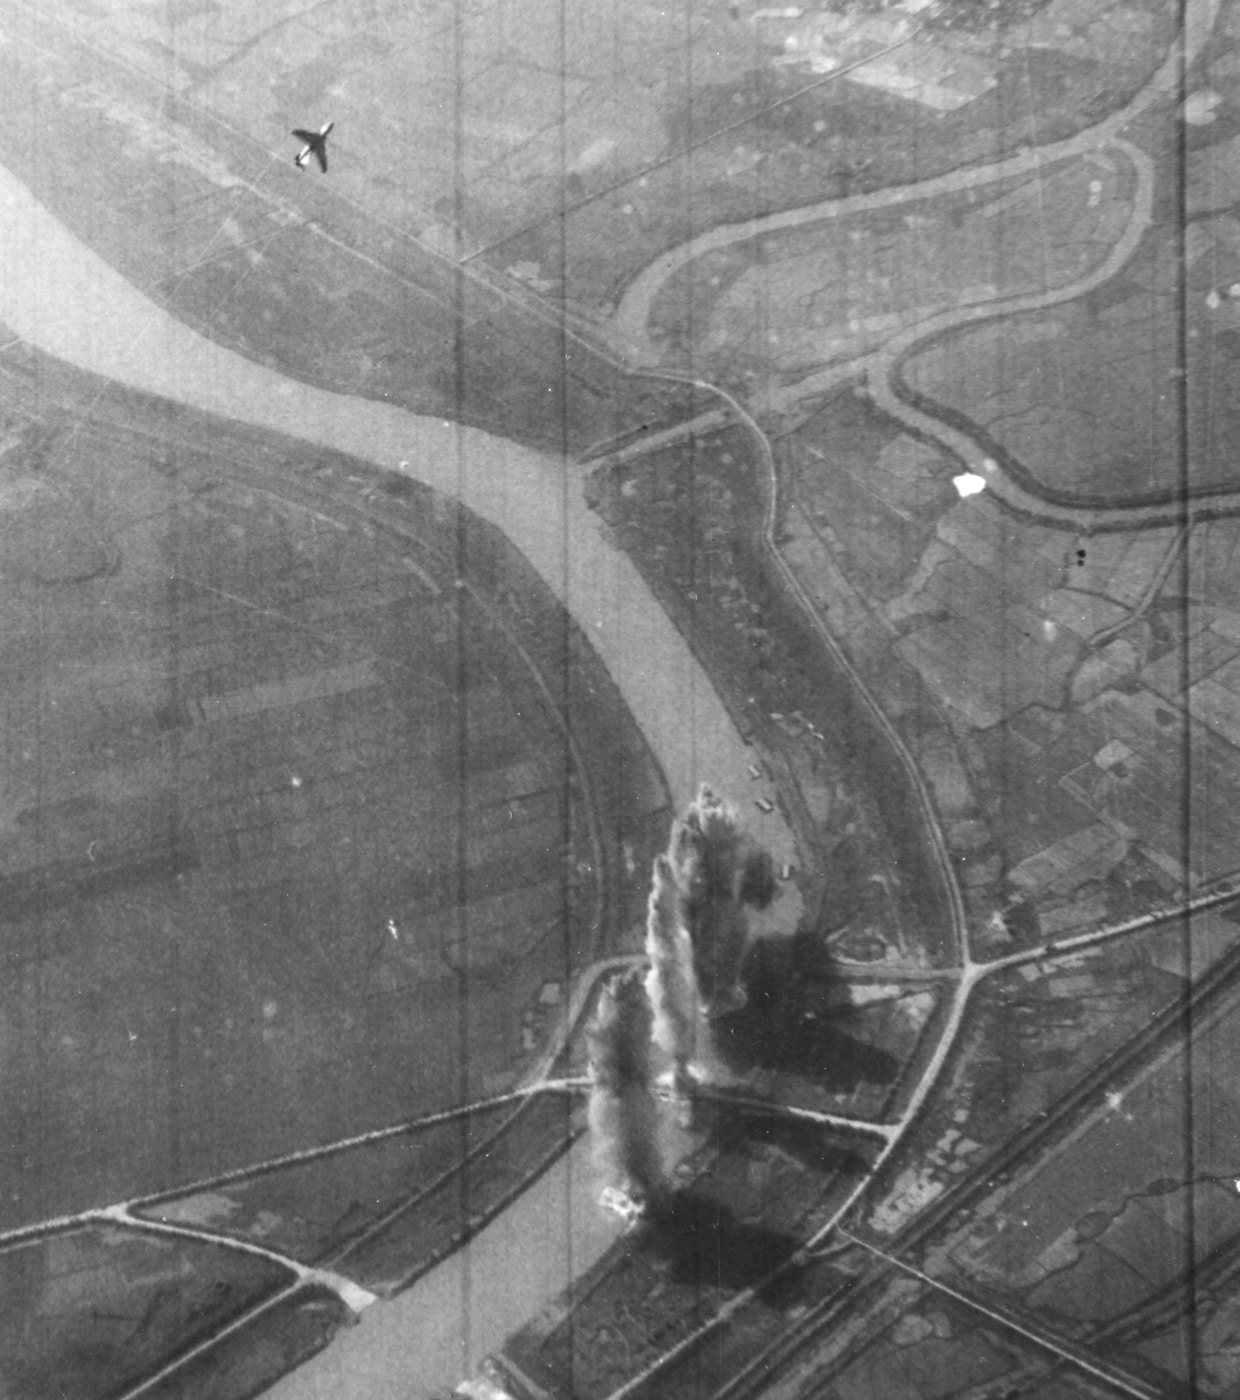 a-7 corsair attacks dai doung highway bridge in north vietnam